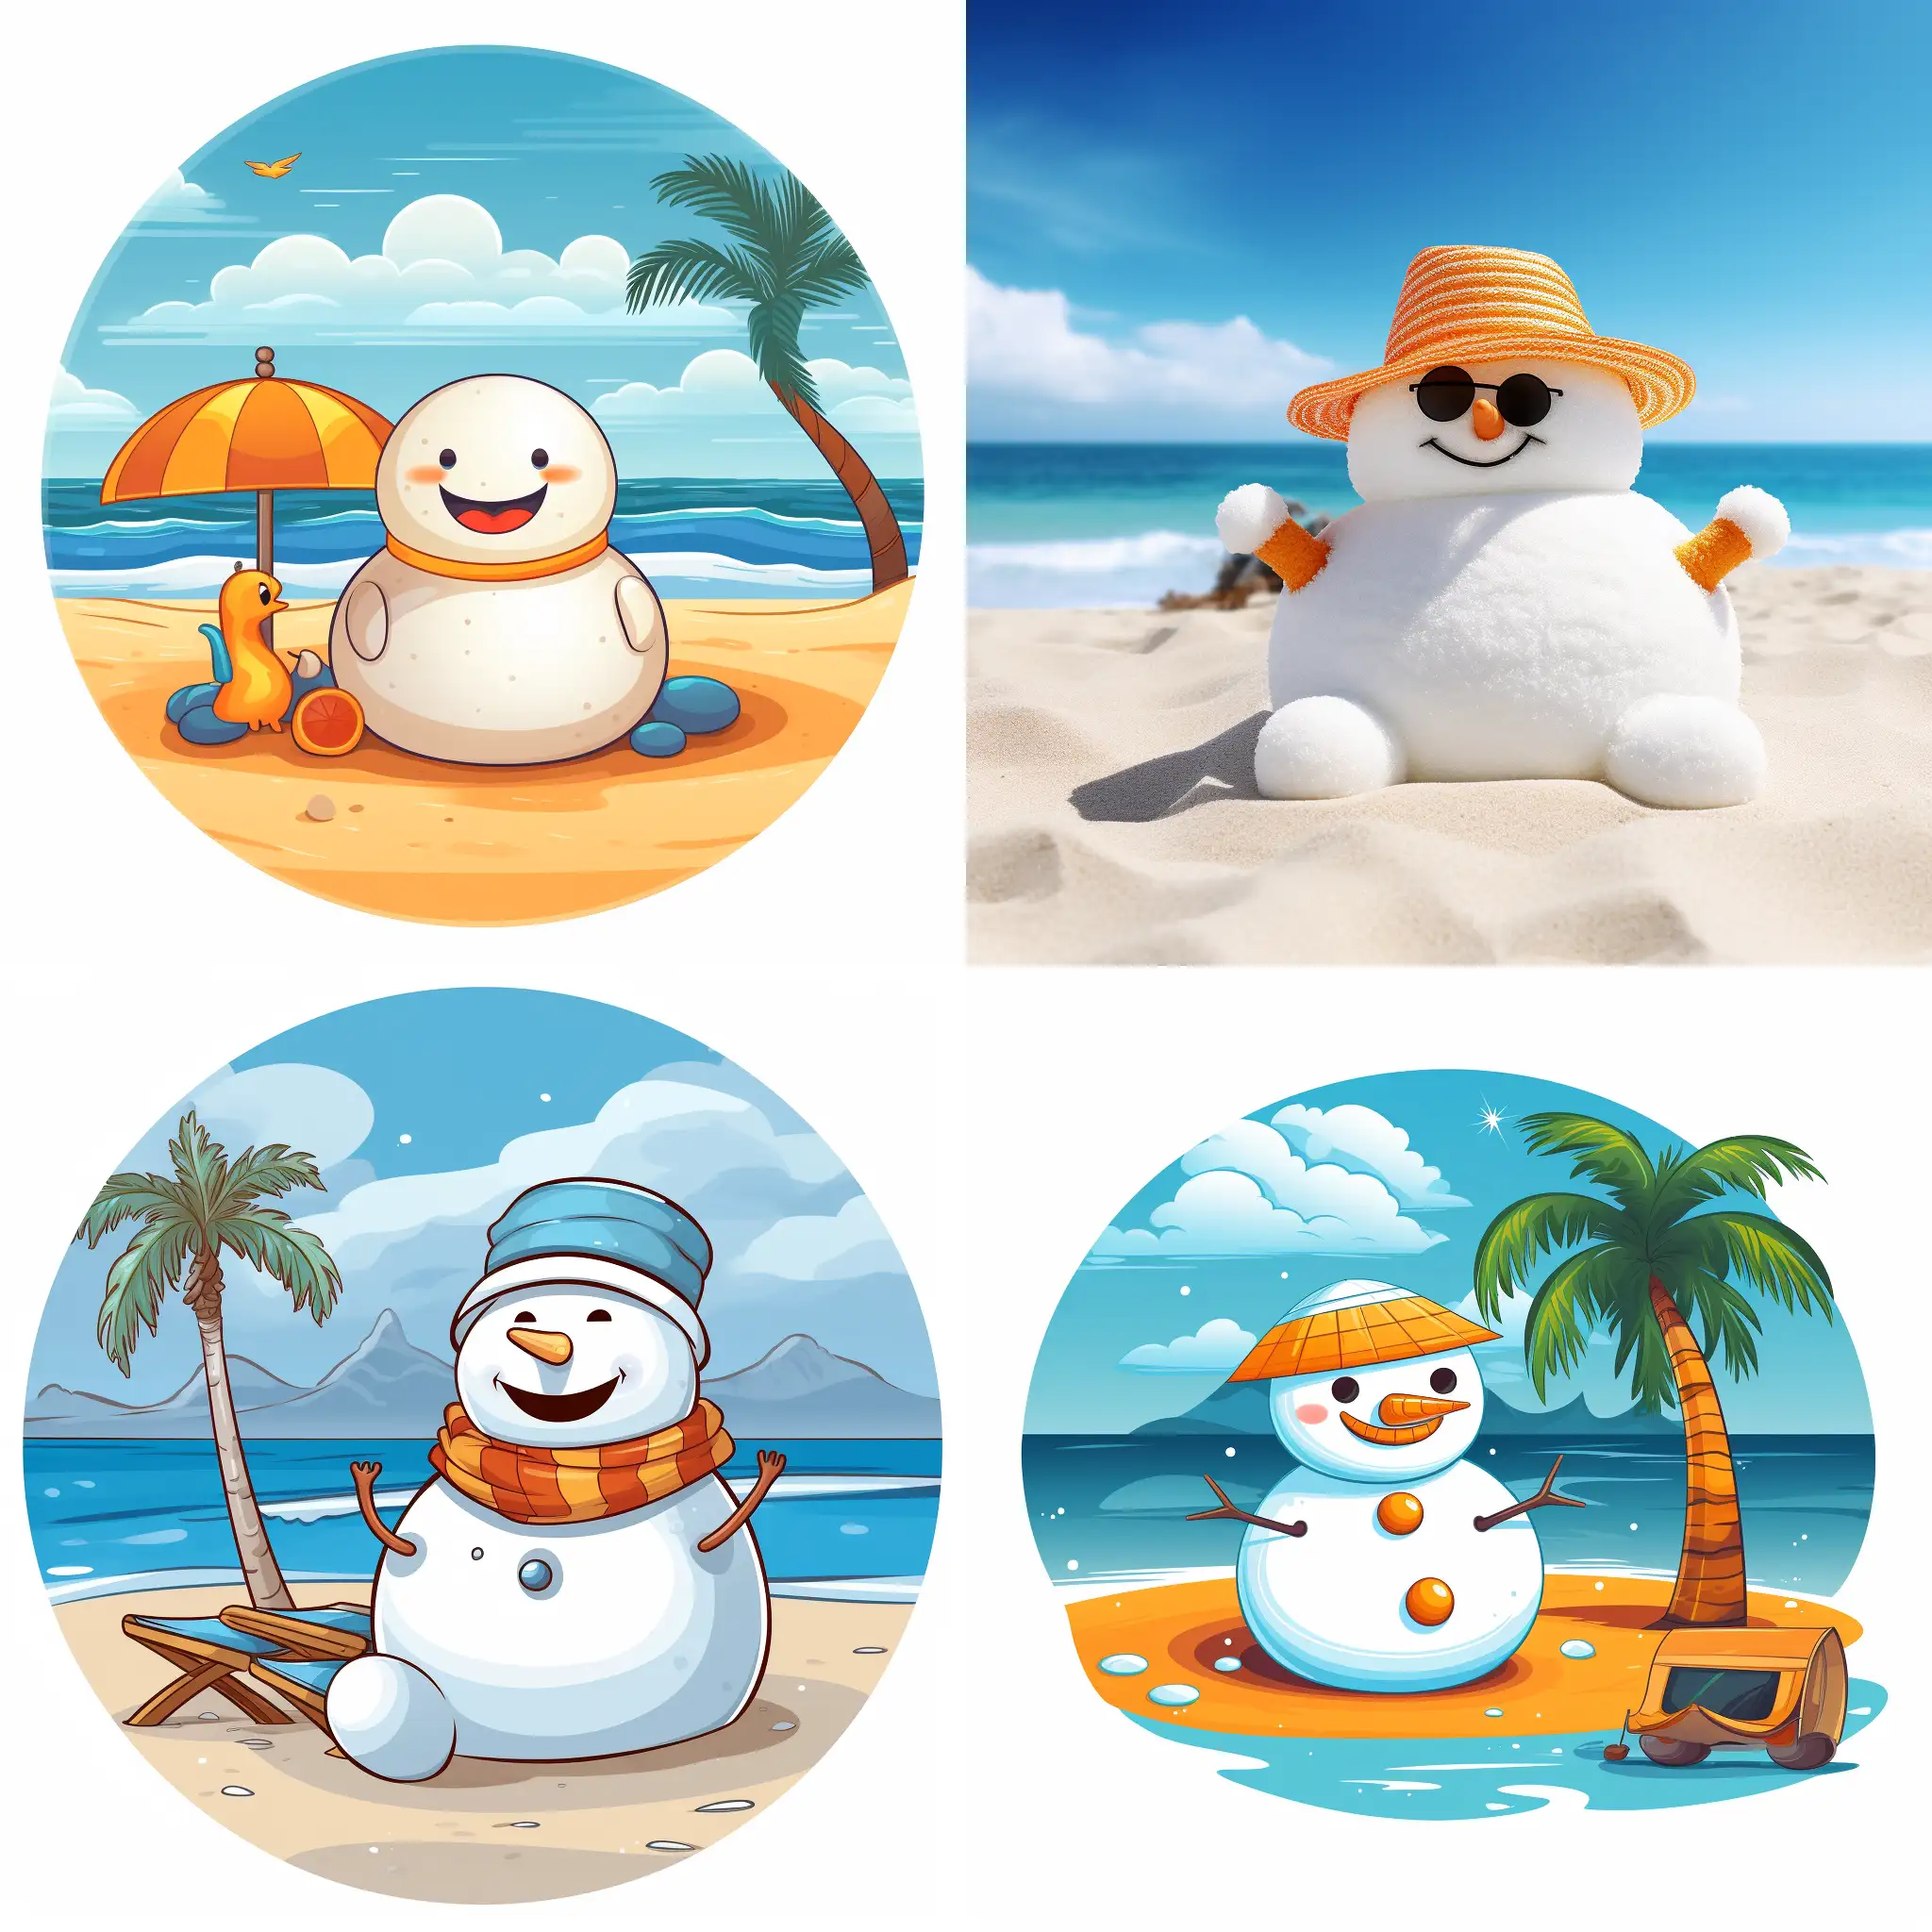 emoji snowman relaxing on the beach
